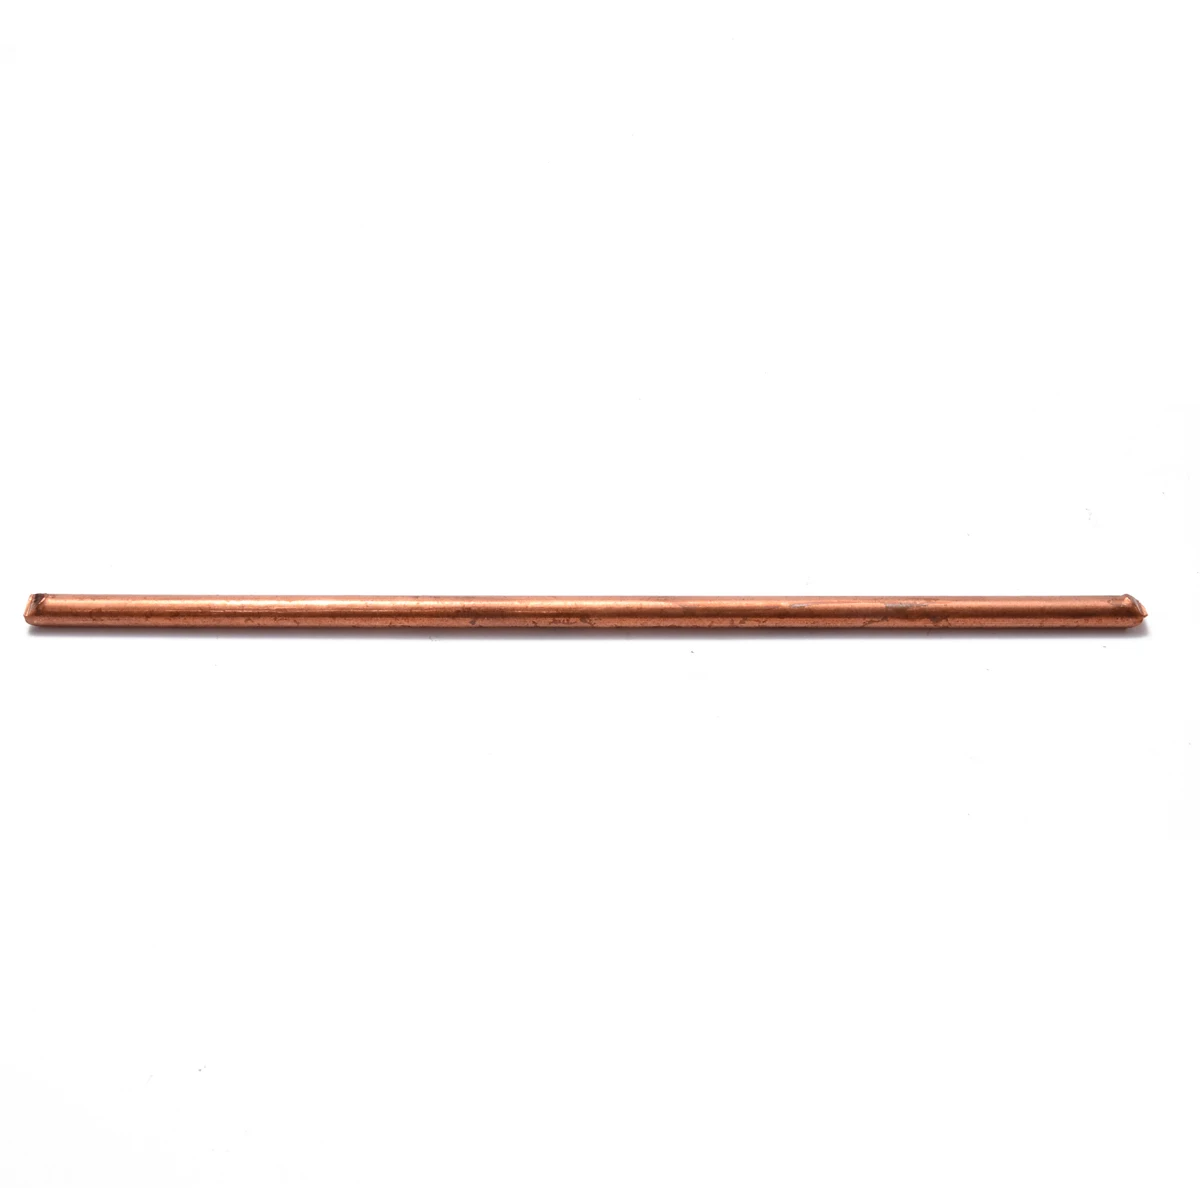 1x 99.9% Pure Copper Cu Metal Rod Tube Cylinder Diameter 6mm Length 200mm 